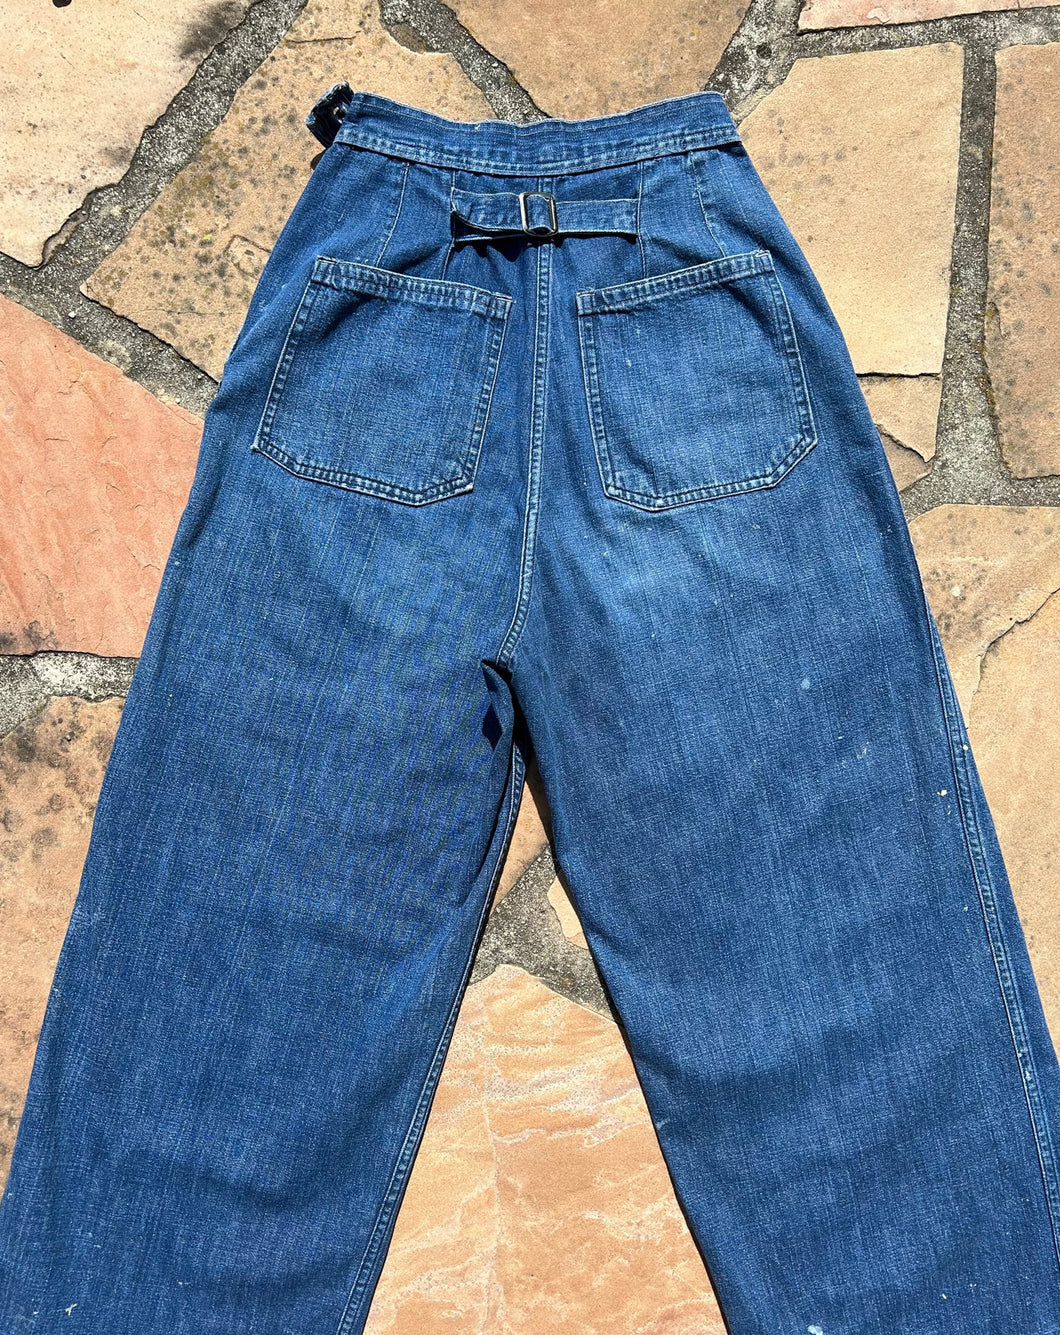 1940s WAVES jeans . vintage WWII denim pants . 24-25 waist